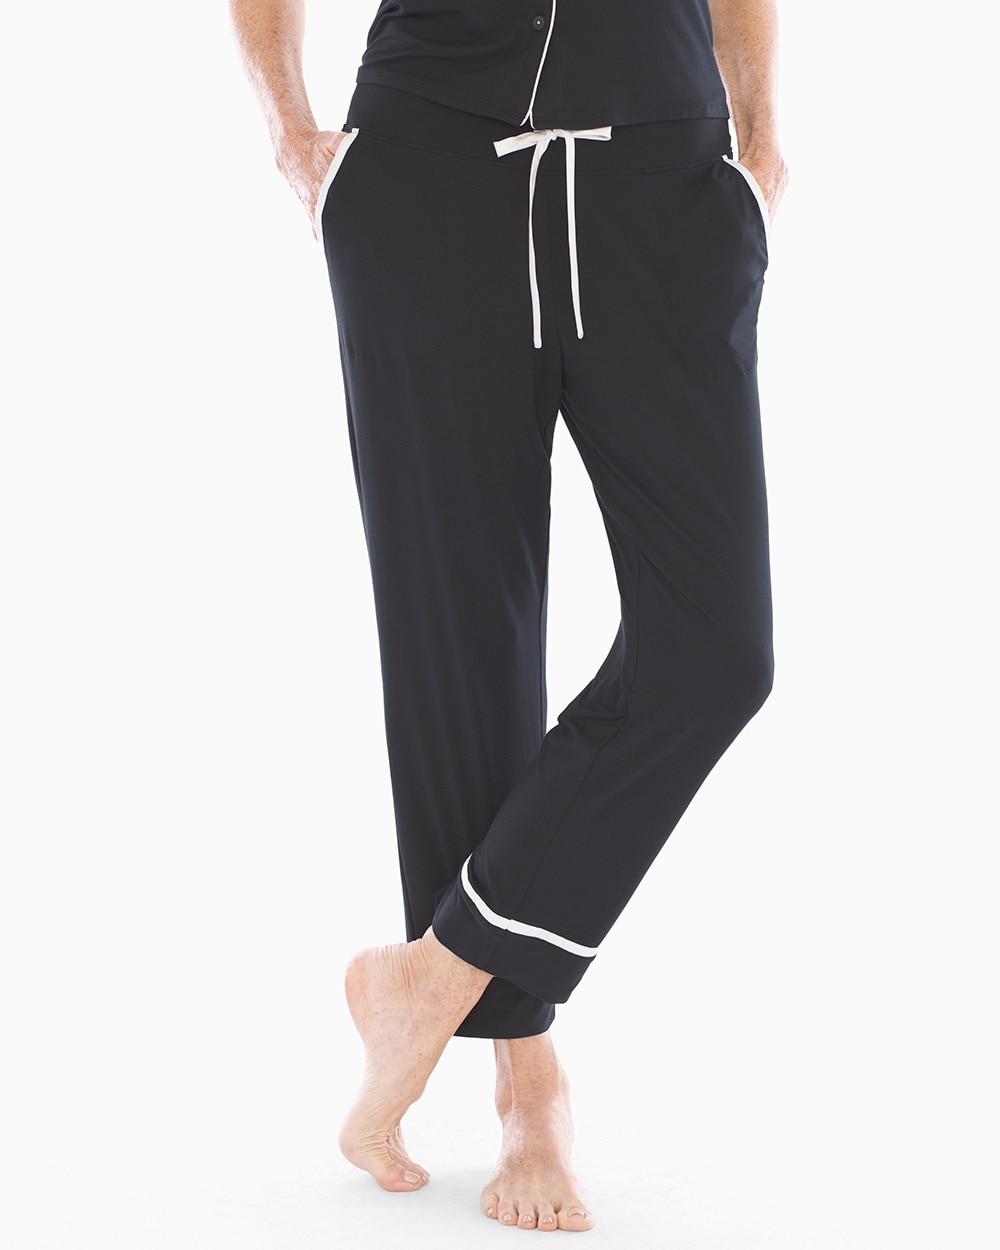 Cool Nights Satin Trim Ankle Pajama Pants Black